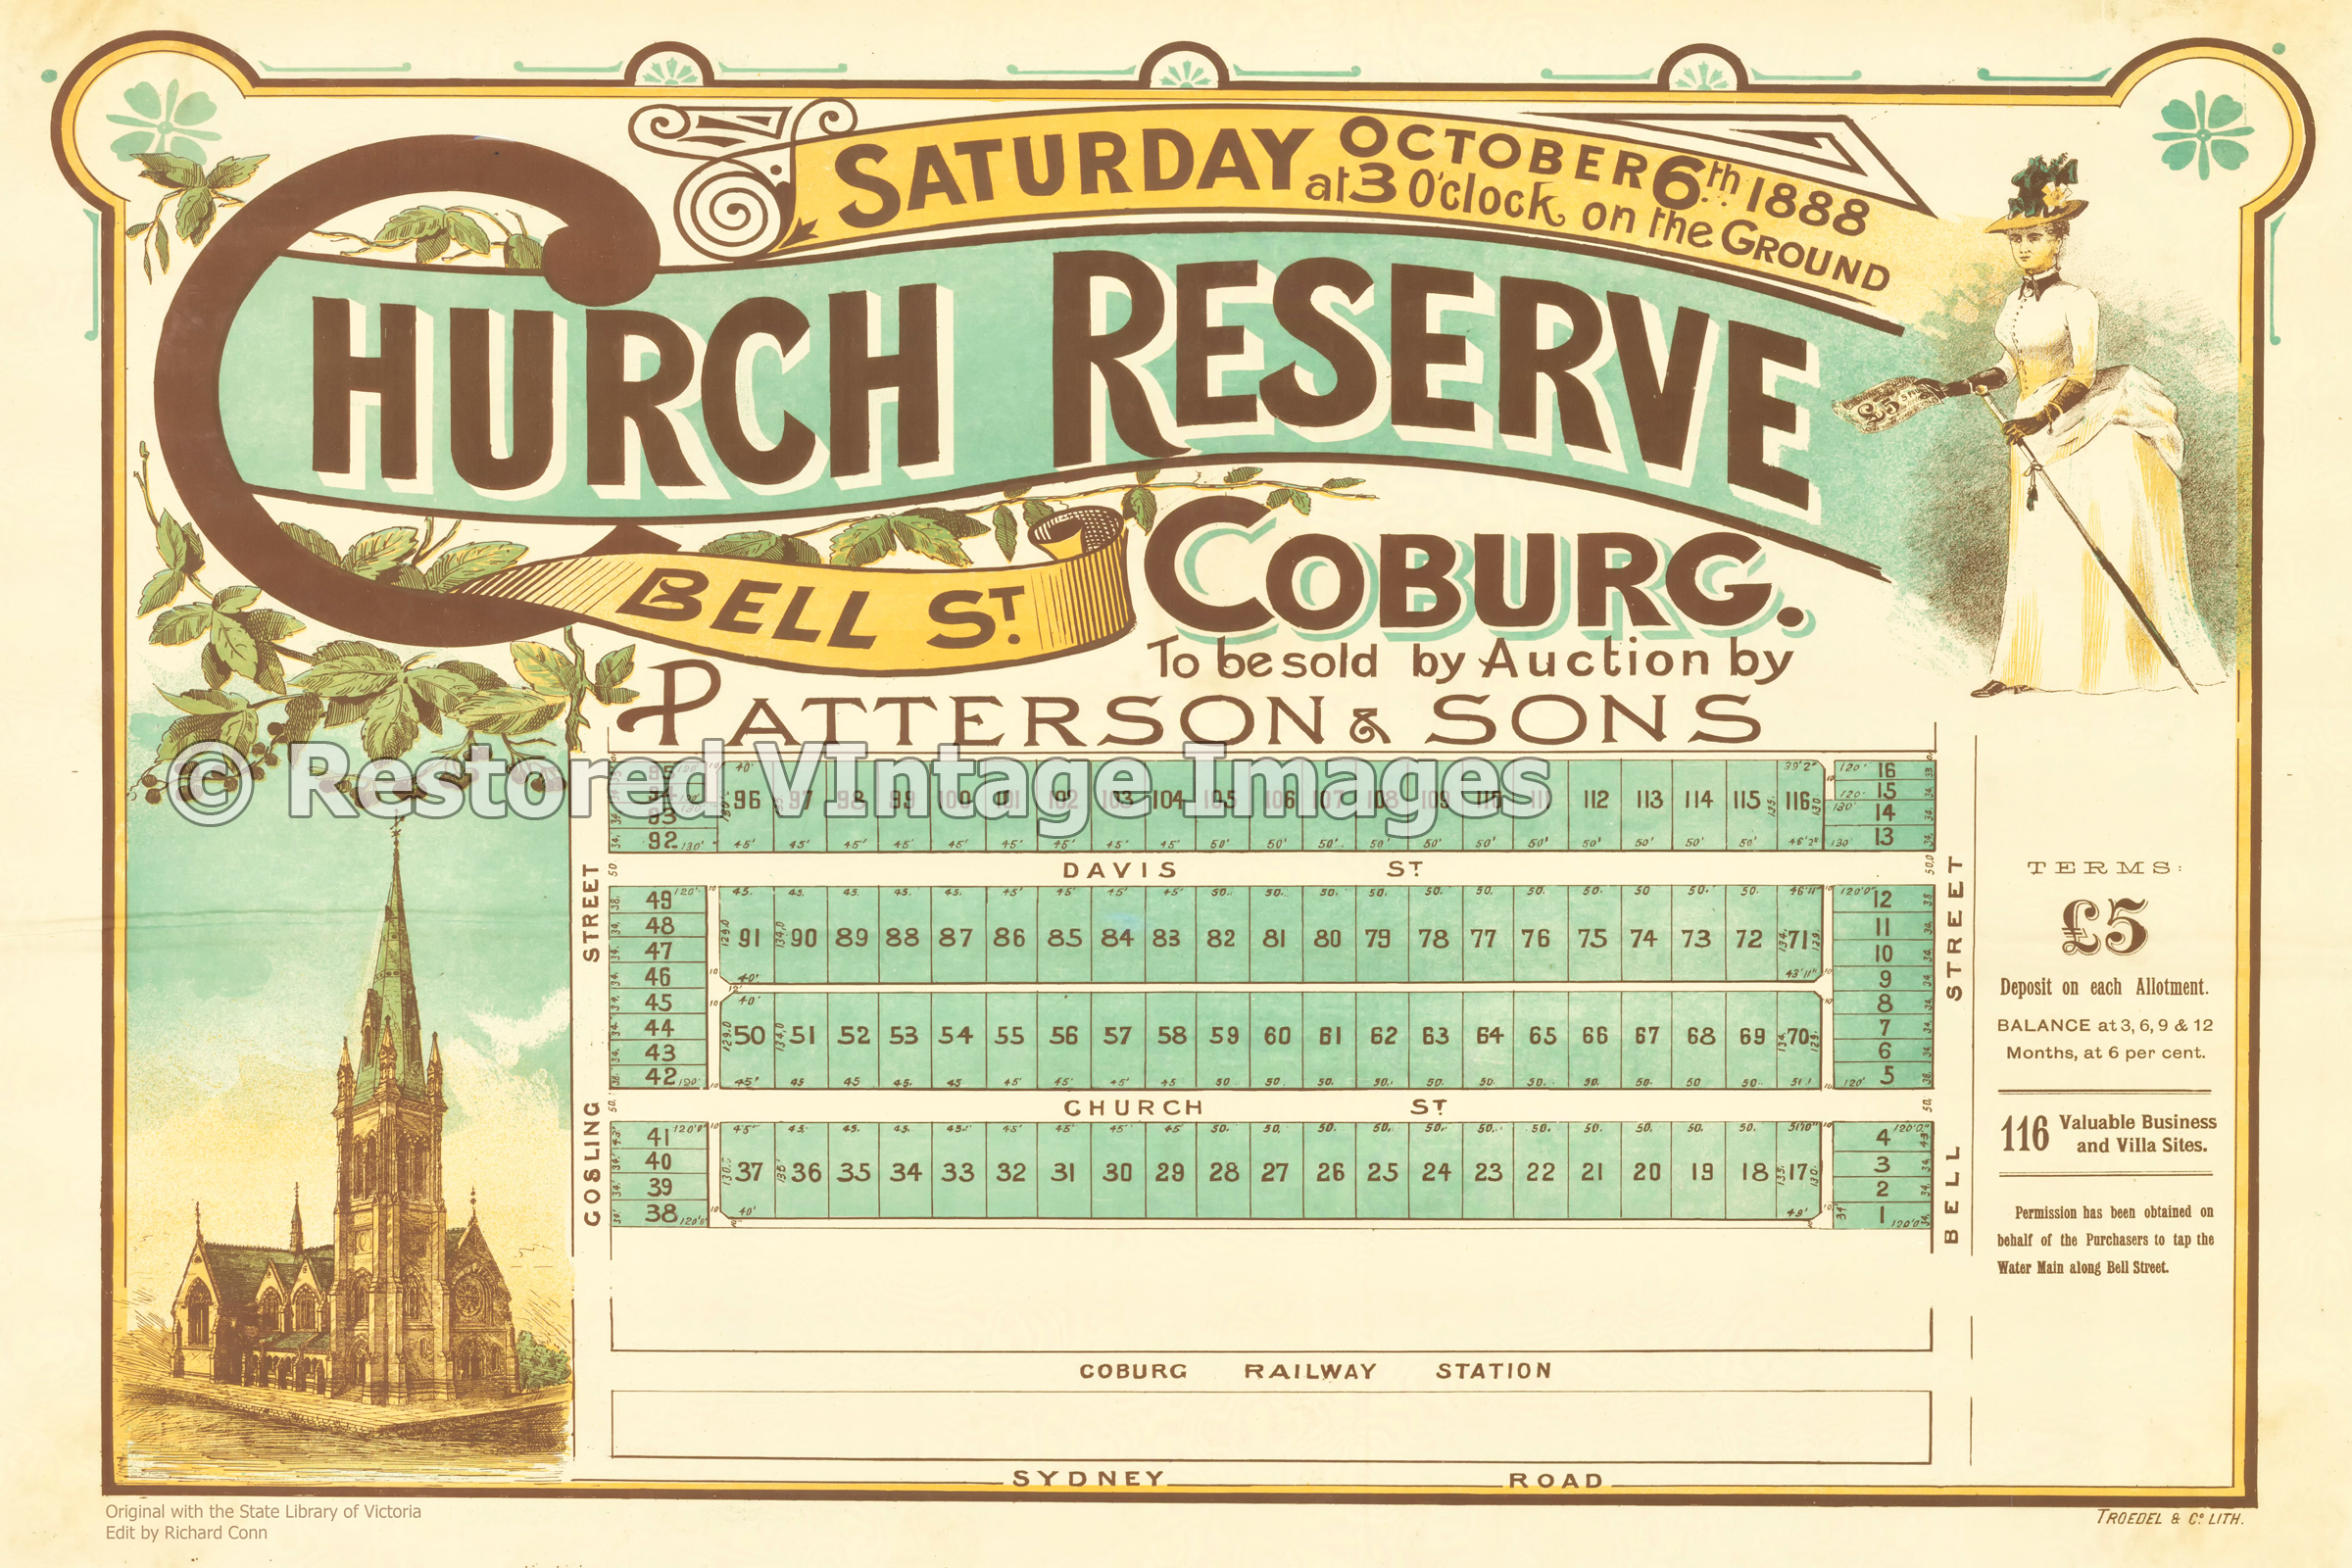 Church Reserve 6th October 1888 – Coburg